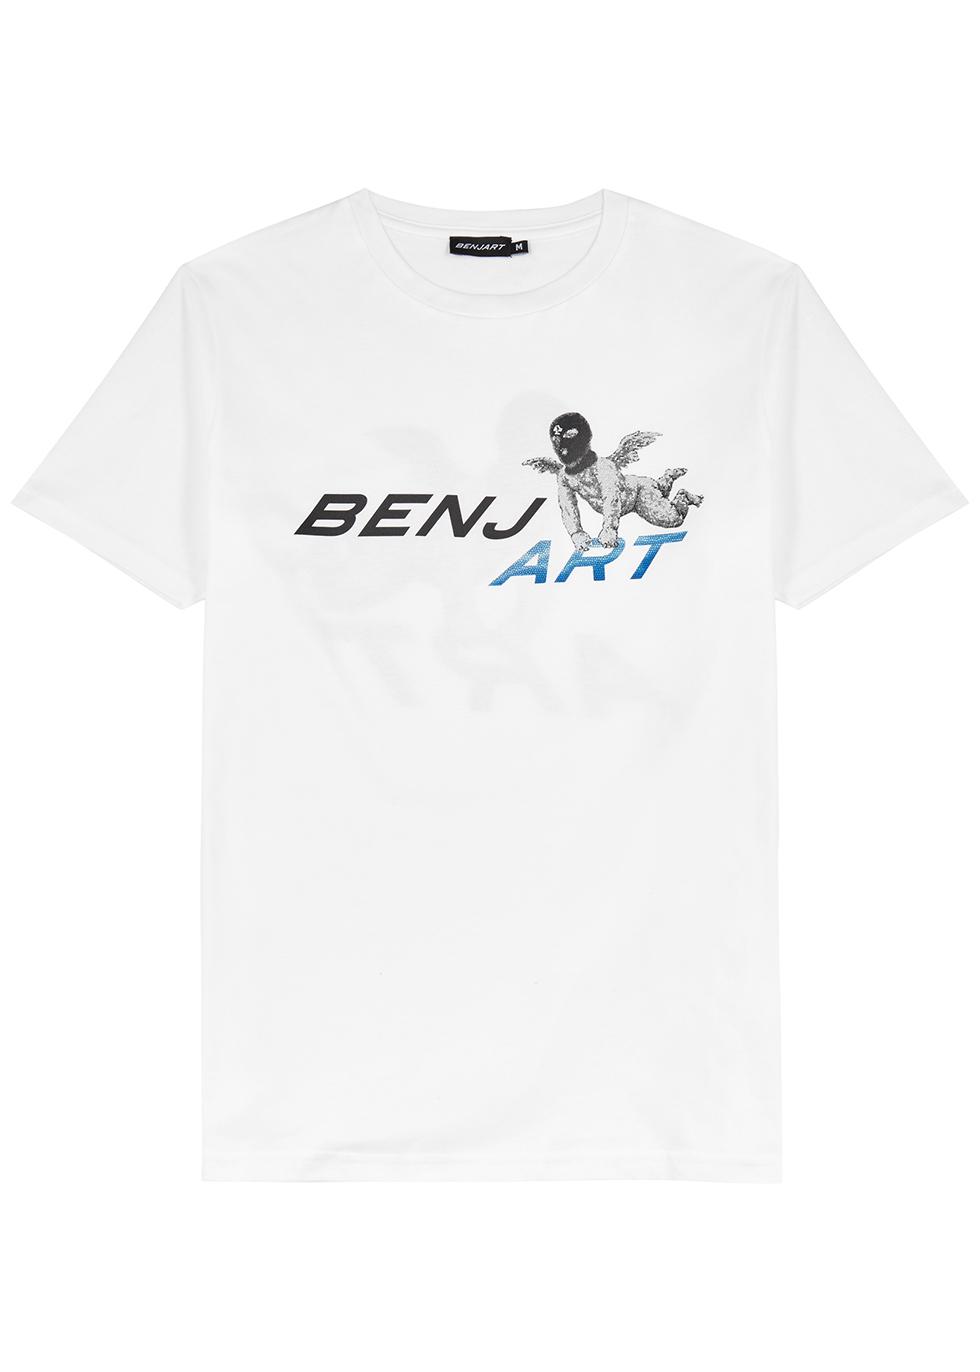 Cherub printed cotton T-shirt by BENJART